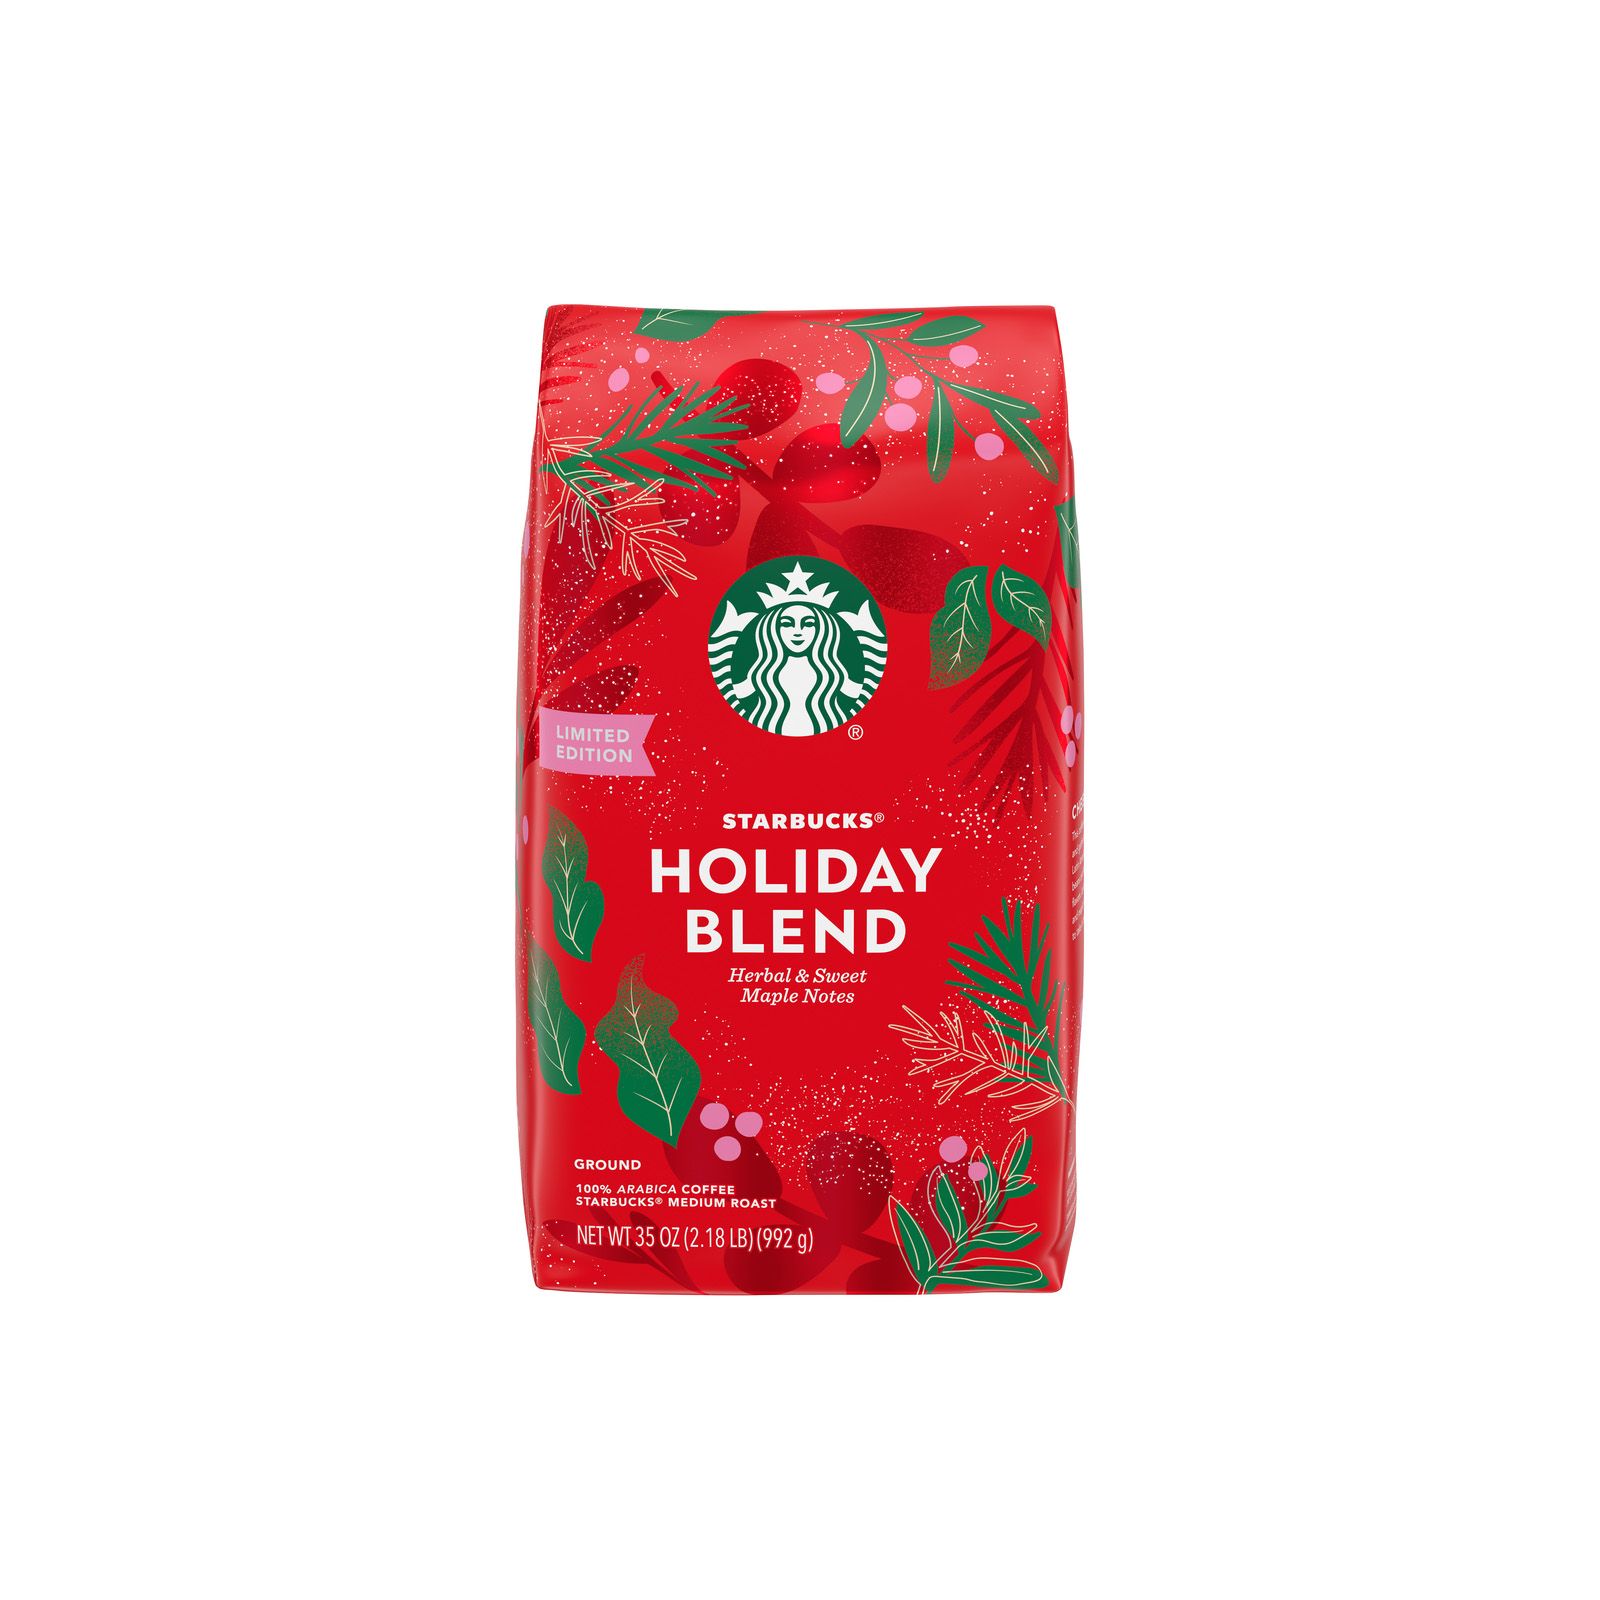 Starbucks Holiday Blend Medium Roast Ground Coffee, 1 bag (35 oz.)